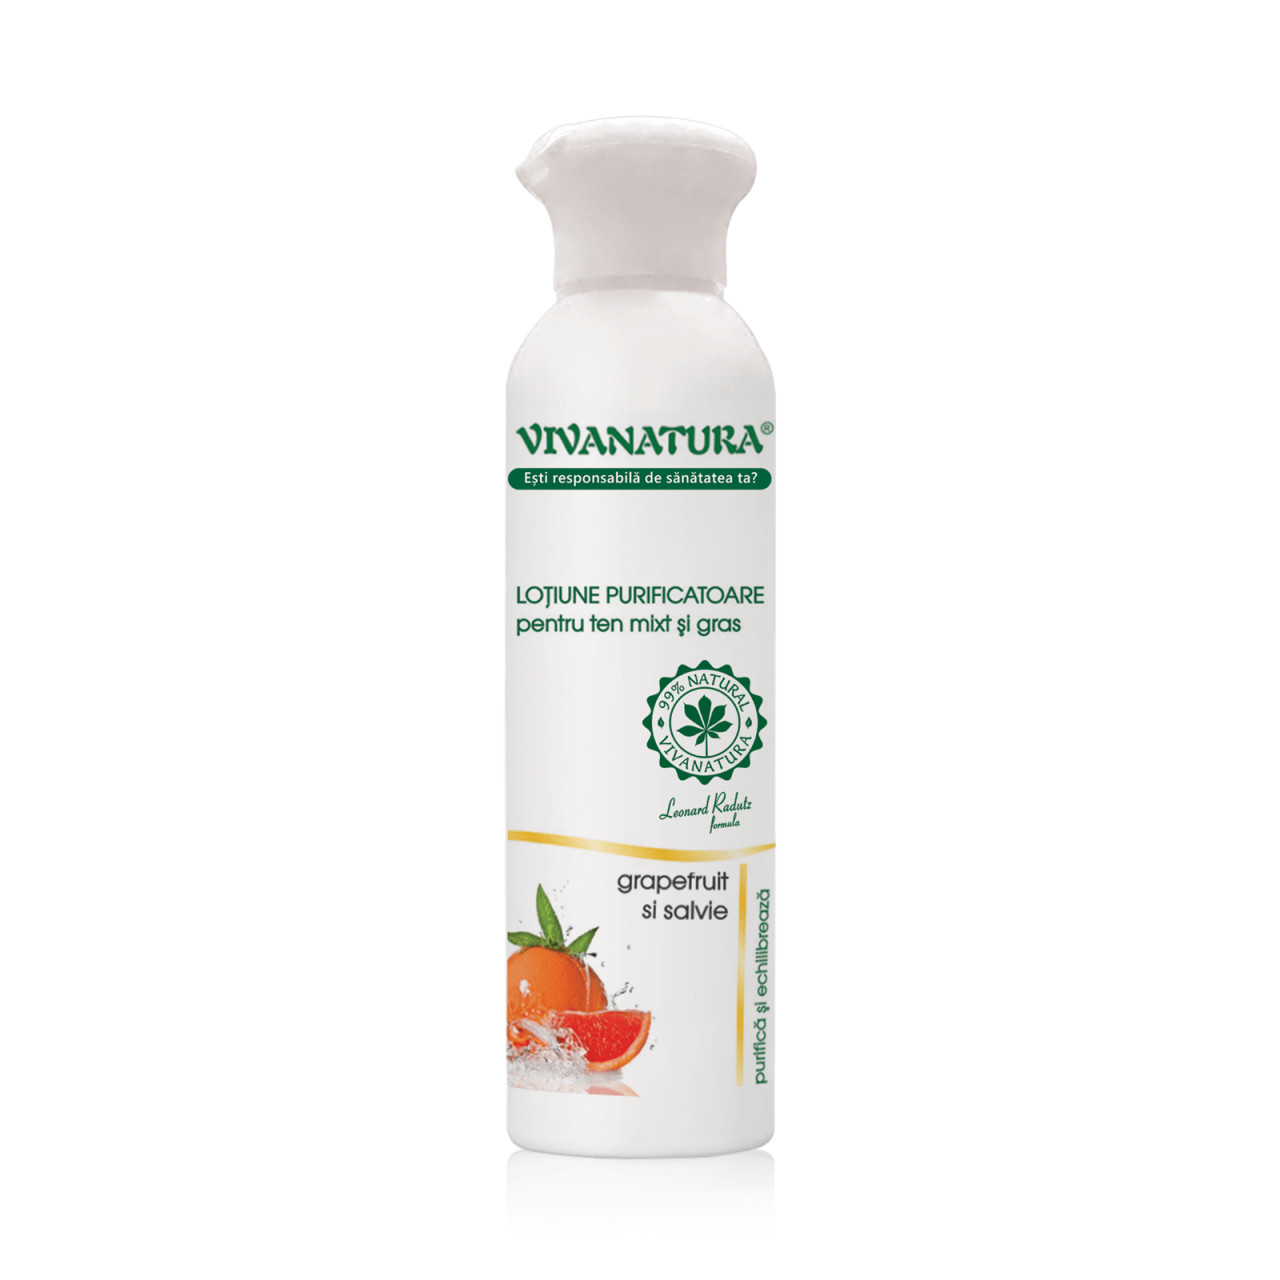 Lotiune purificatoare pentru ten mixt si gras - 150 ml Vivanatura